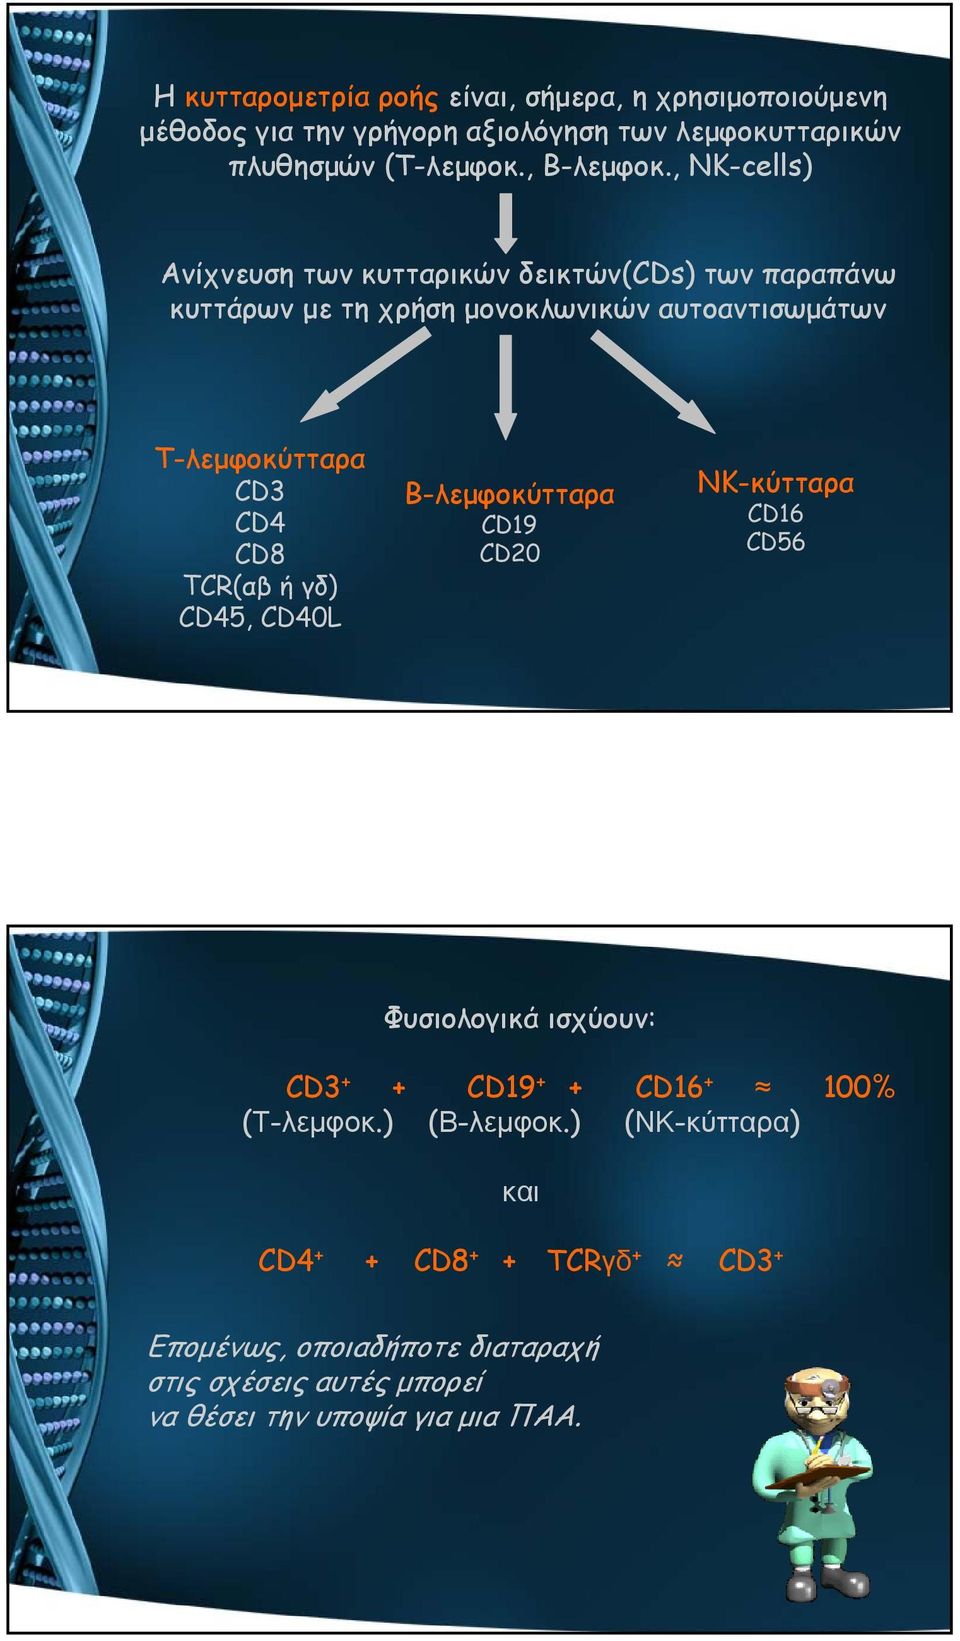 TCR(αβ ή γδ) CD45, CD40L Β-λεμφοκύτταρα CD19 CD20 NK-κύτταρα CD16 CD56 Φυσιολογικά ισχύουν: CD3 + + CD19 + + CD16 + 100% (Τ-λεμφοκ.